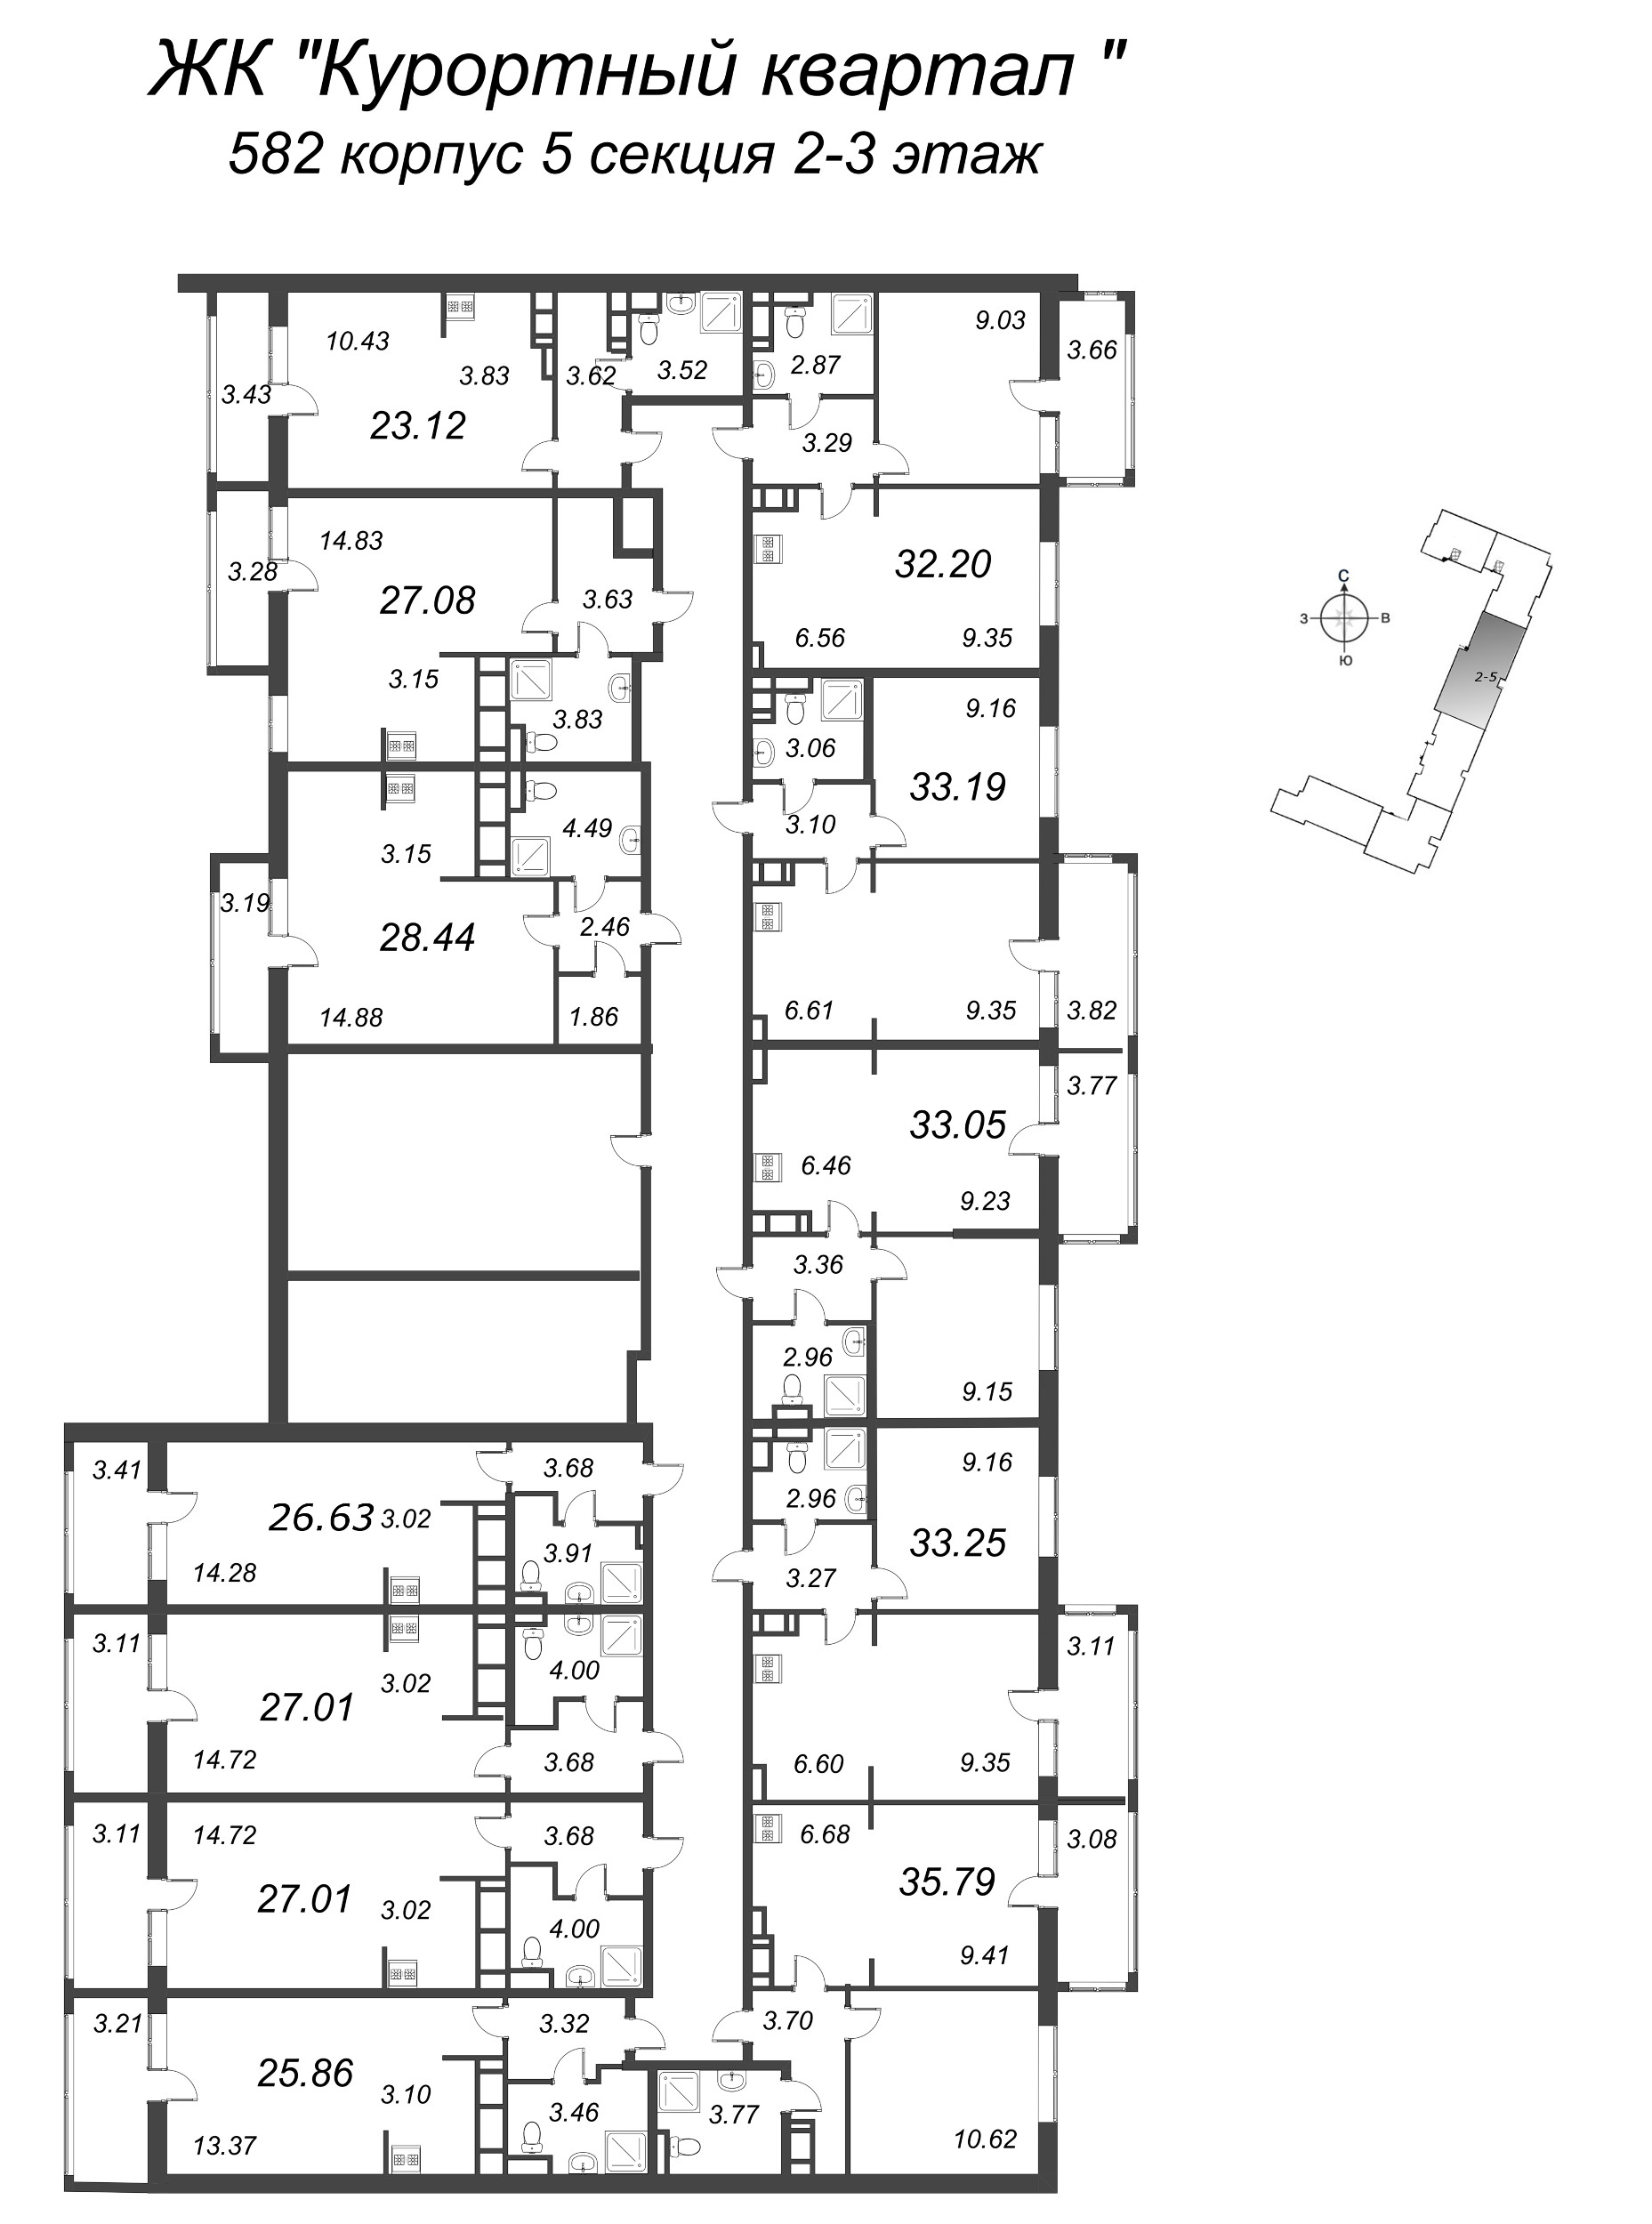 2-комнатная (Евро) квартира, 33.05 м² - планировка этажа